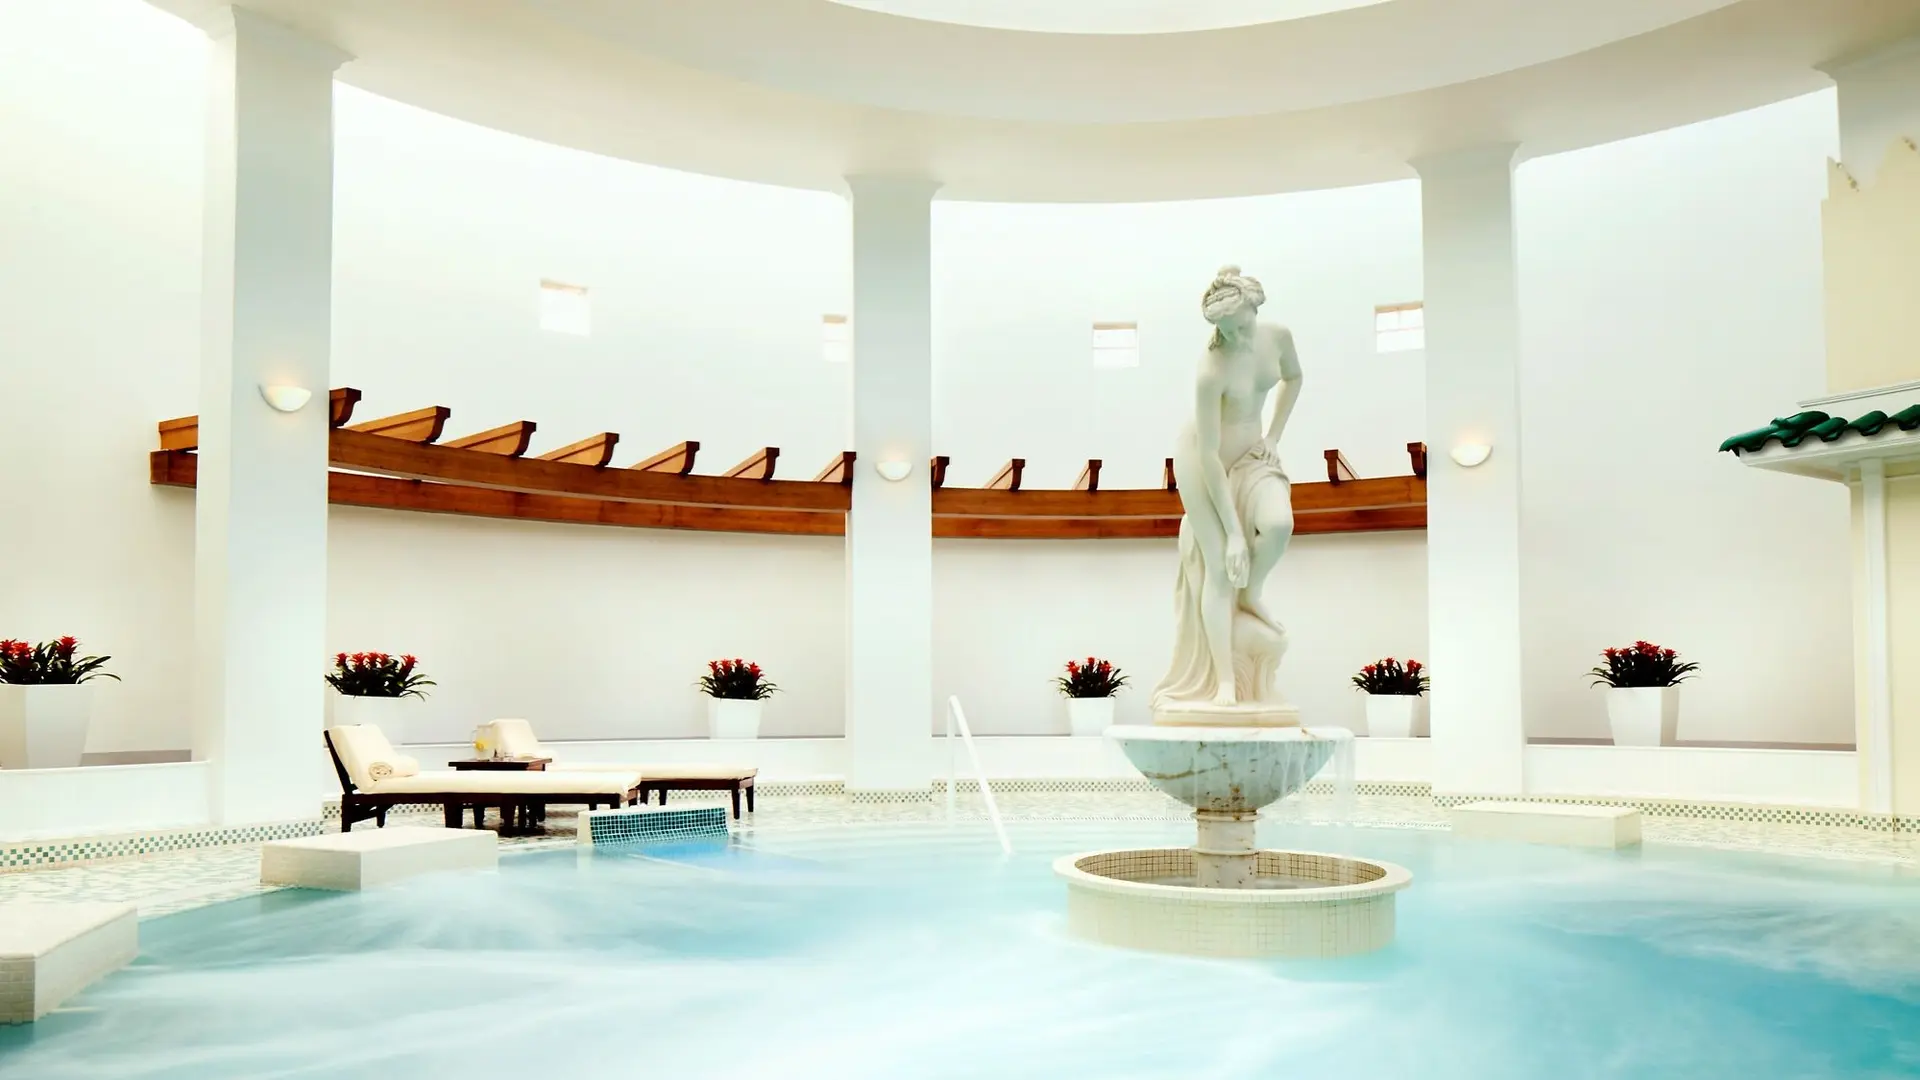 Hotel review Service & Facilities' - The Ritz-Carlton, Bahrain - 1